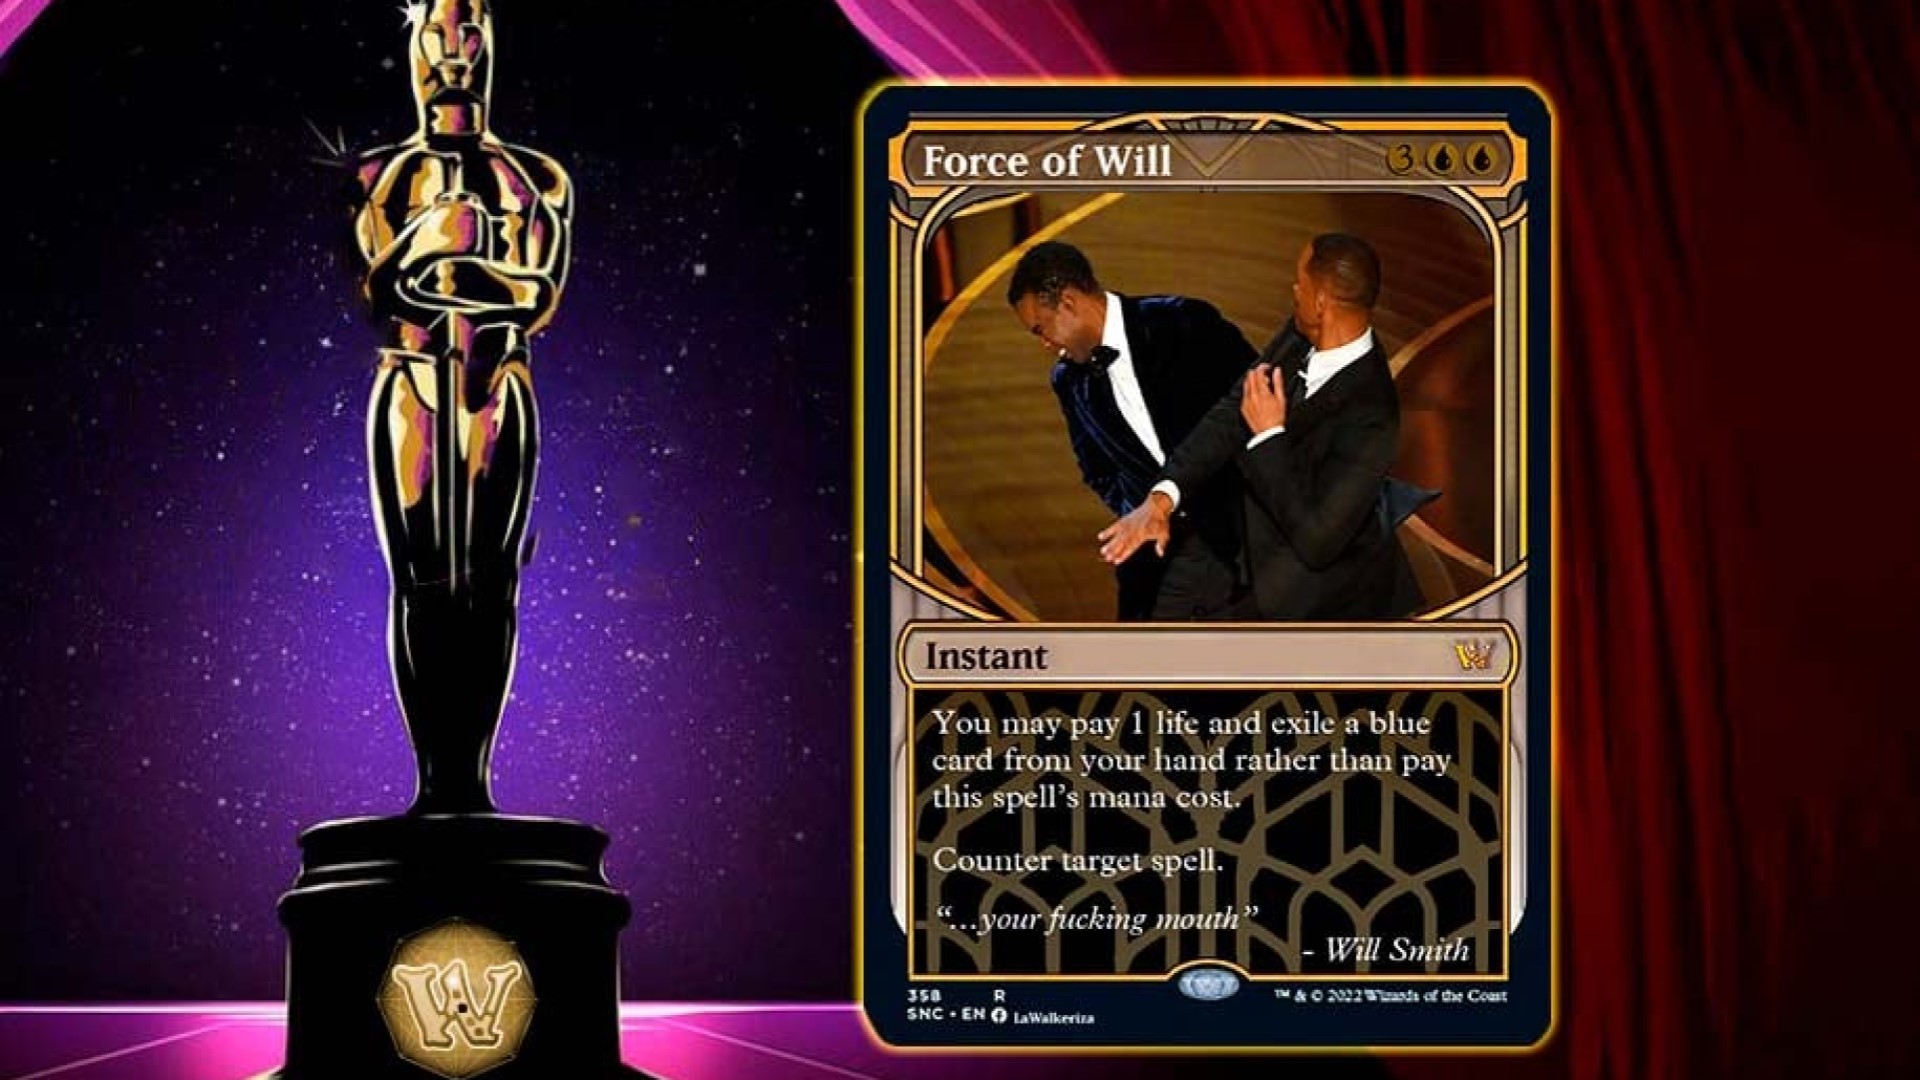 Fan made MTG cards capture the Will Smith Oscars slap